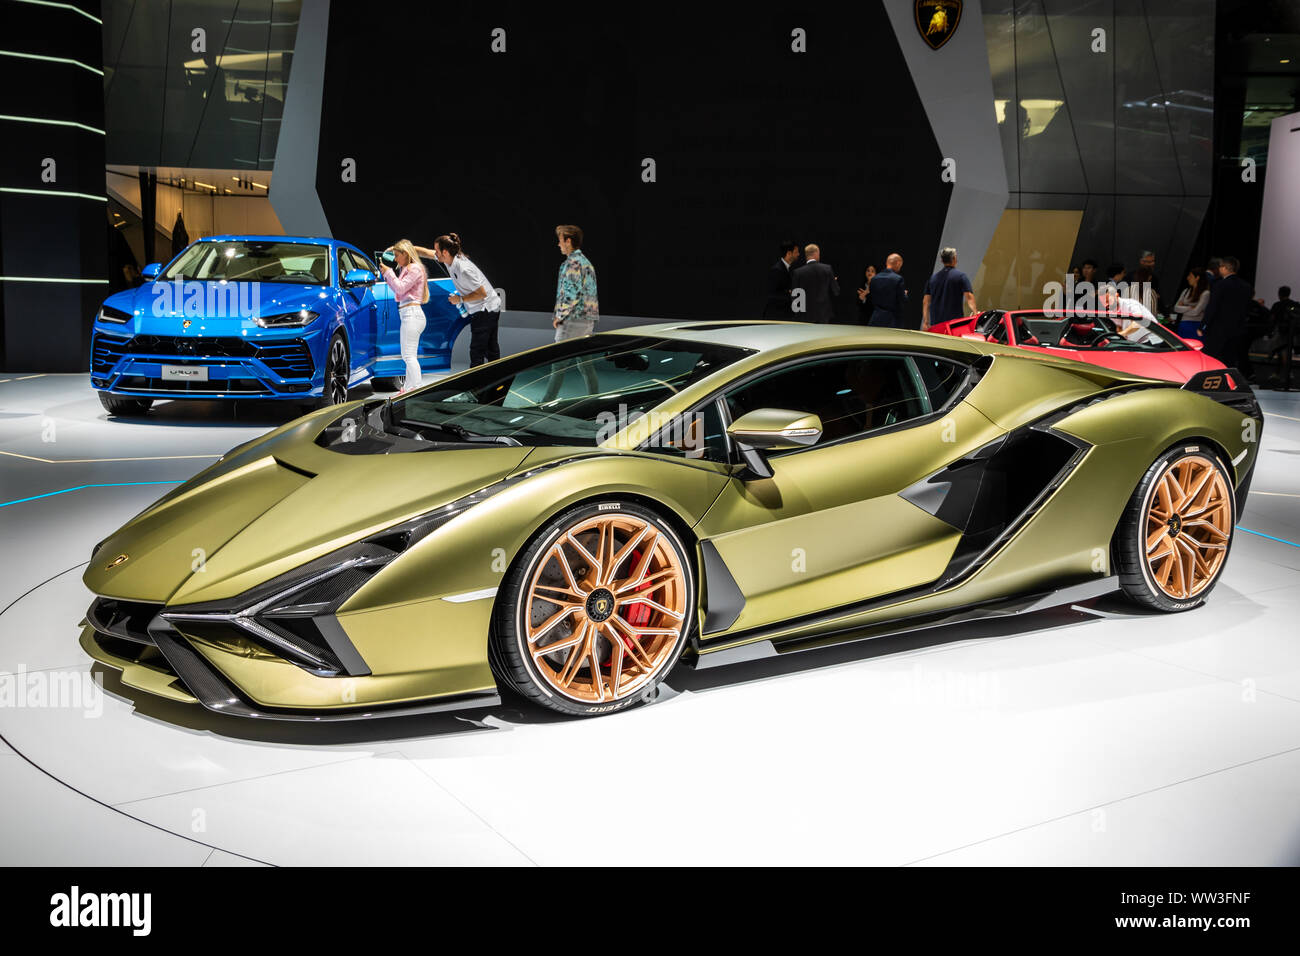 FRANKFURT, GERMANY - SEP 11, 2019: Lamborghini Sian FKP 37 sports car unveiled at the Frankfurt IAA Motor Show 2019. Stock Photo